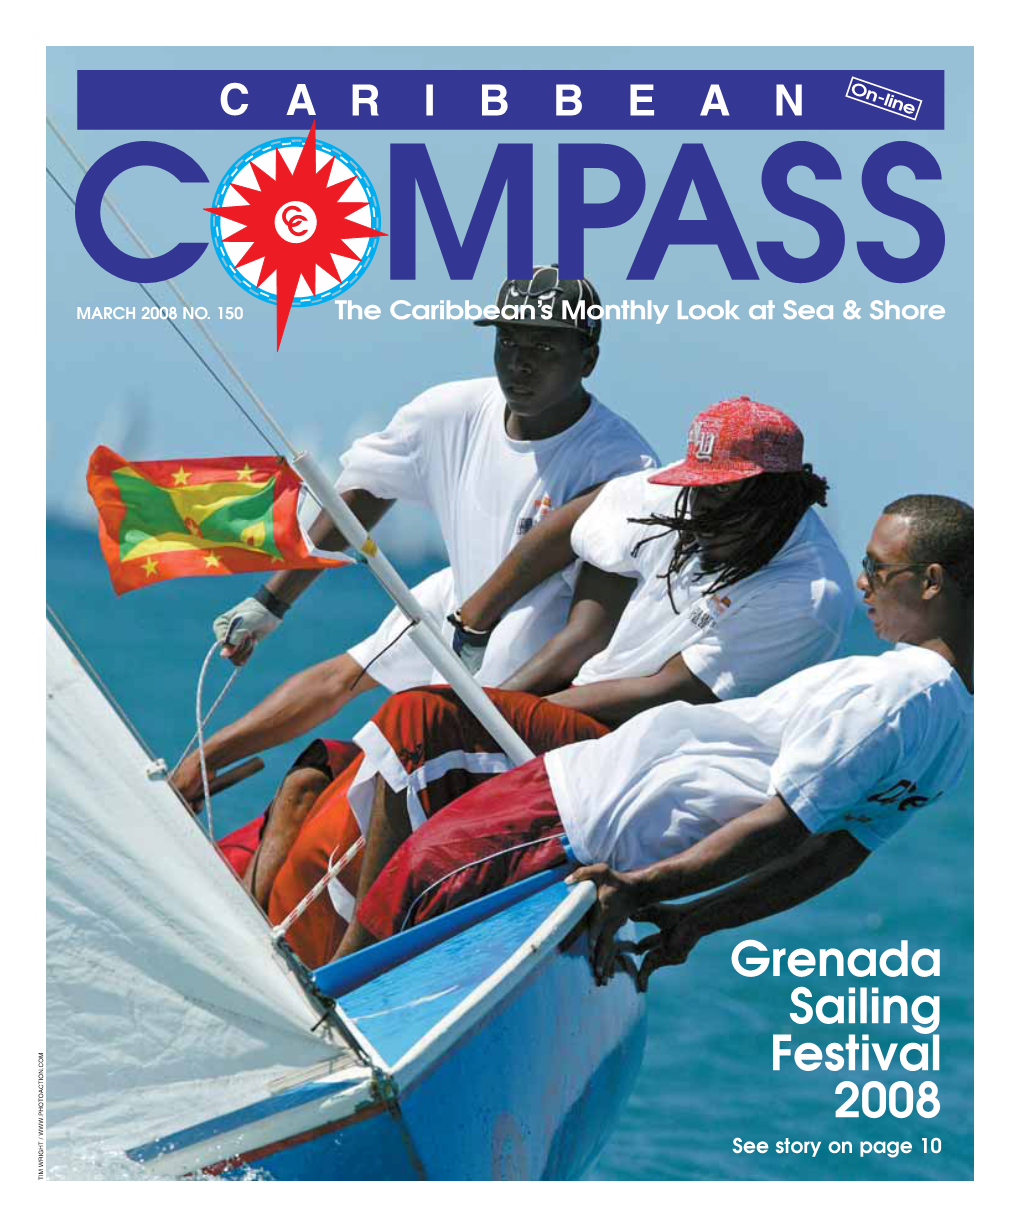 Grenada Sailing Festival 2008